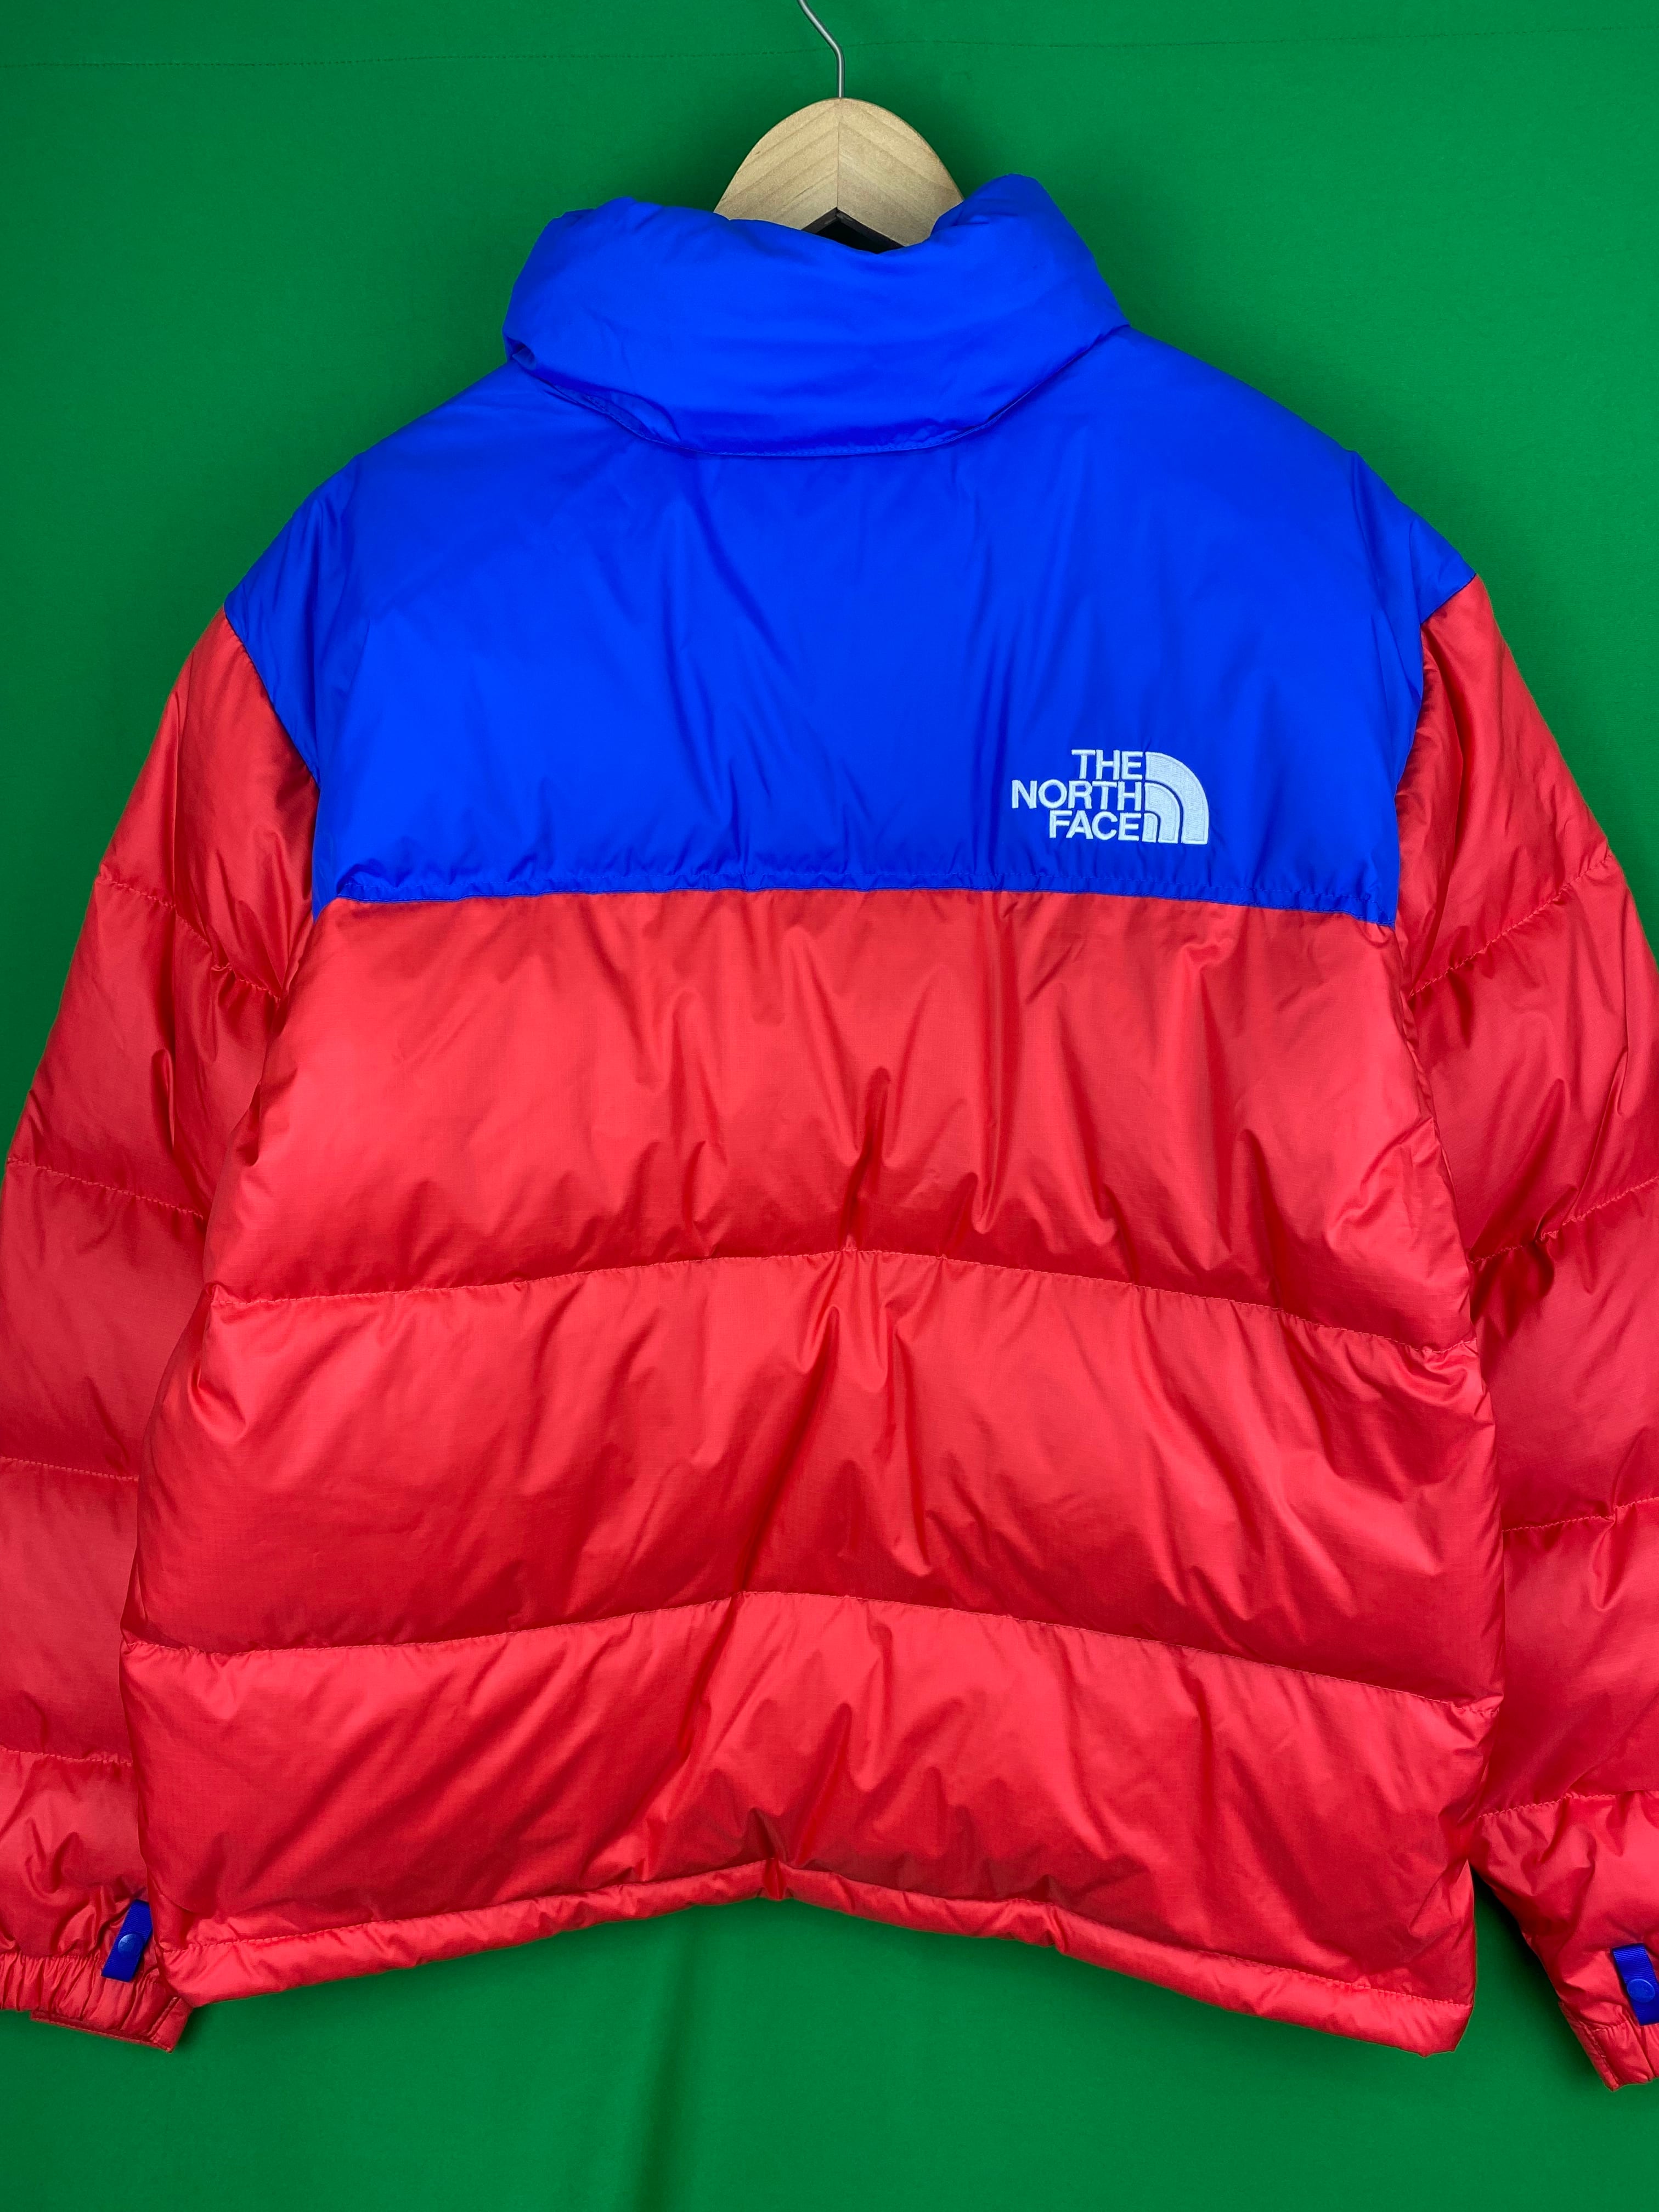 The North Face / 1996 RETRO NUPTSE JACKET | M＆M Select shop